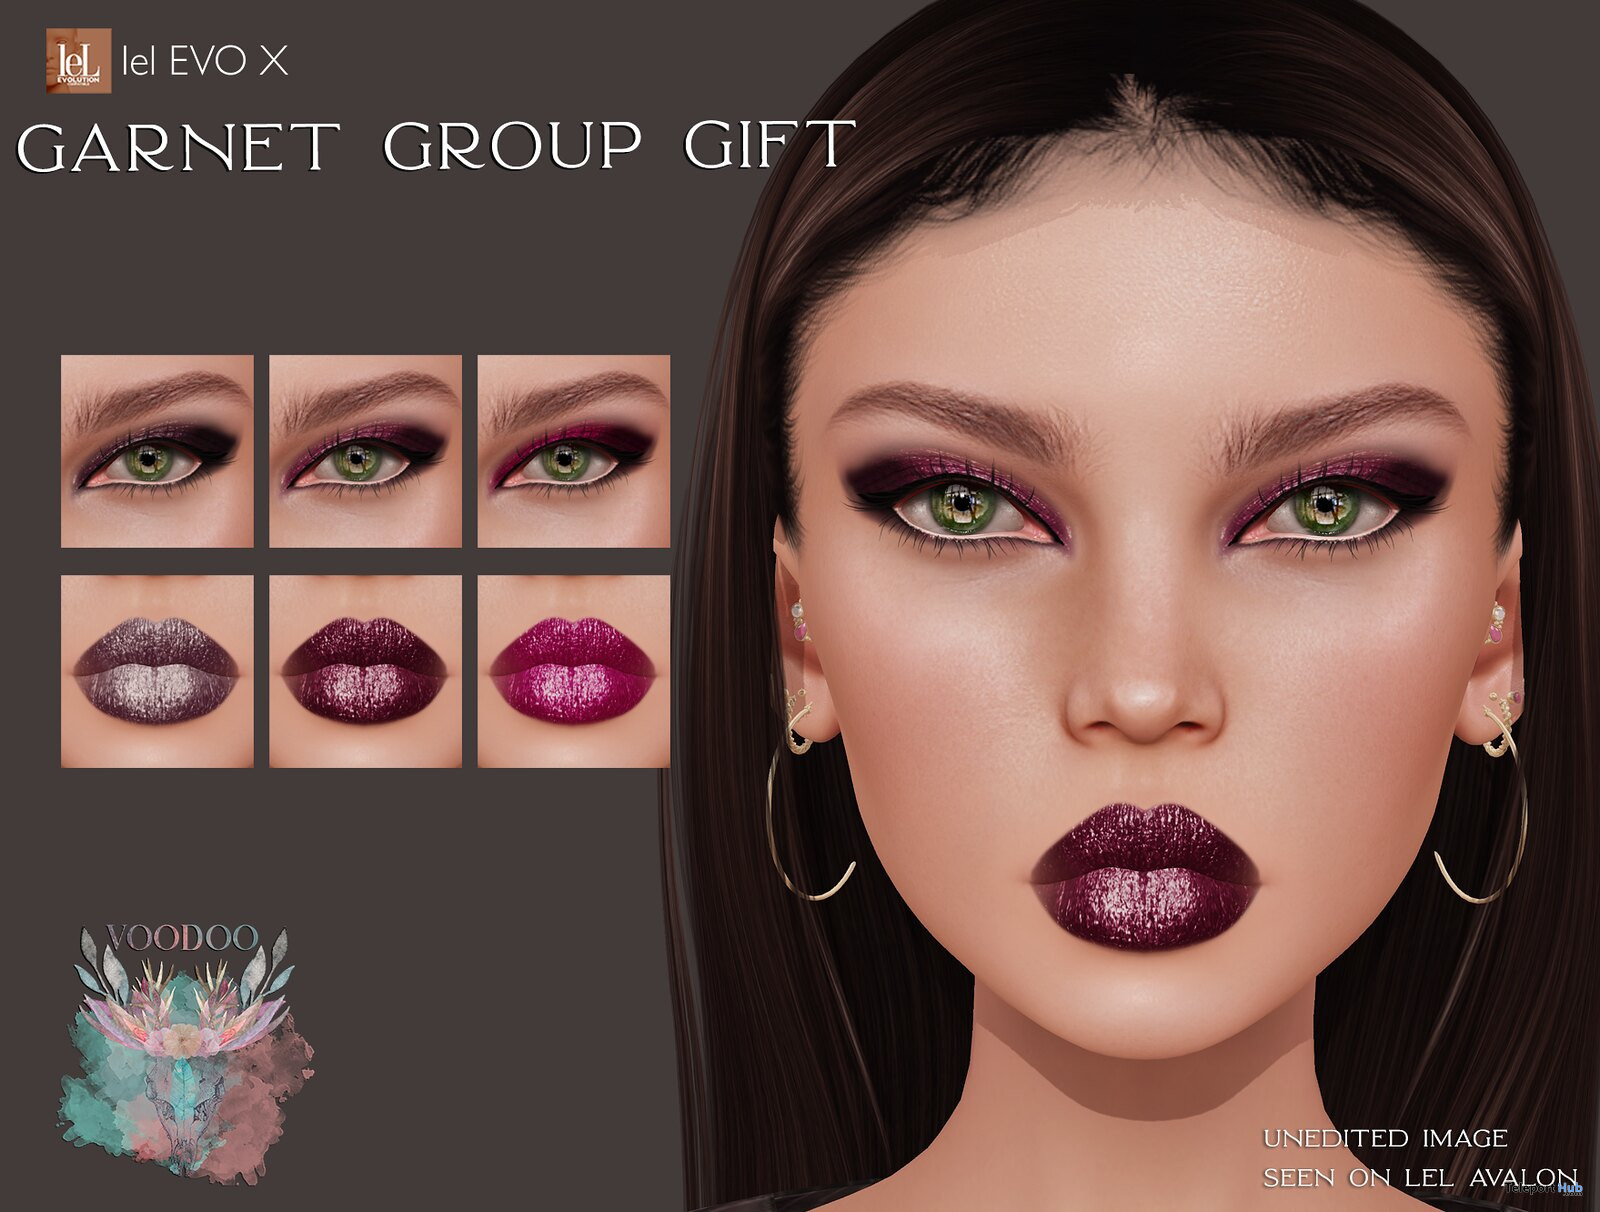 Garnet Makeup Set January 2022 Group Gift by Voodoo MakeUp - Teleport Hub - teleporthub.com